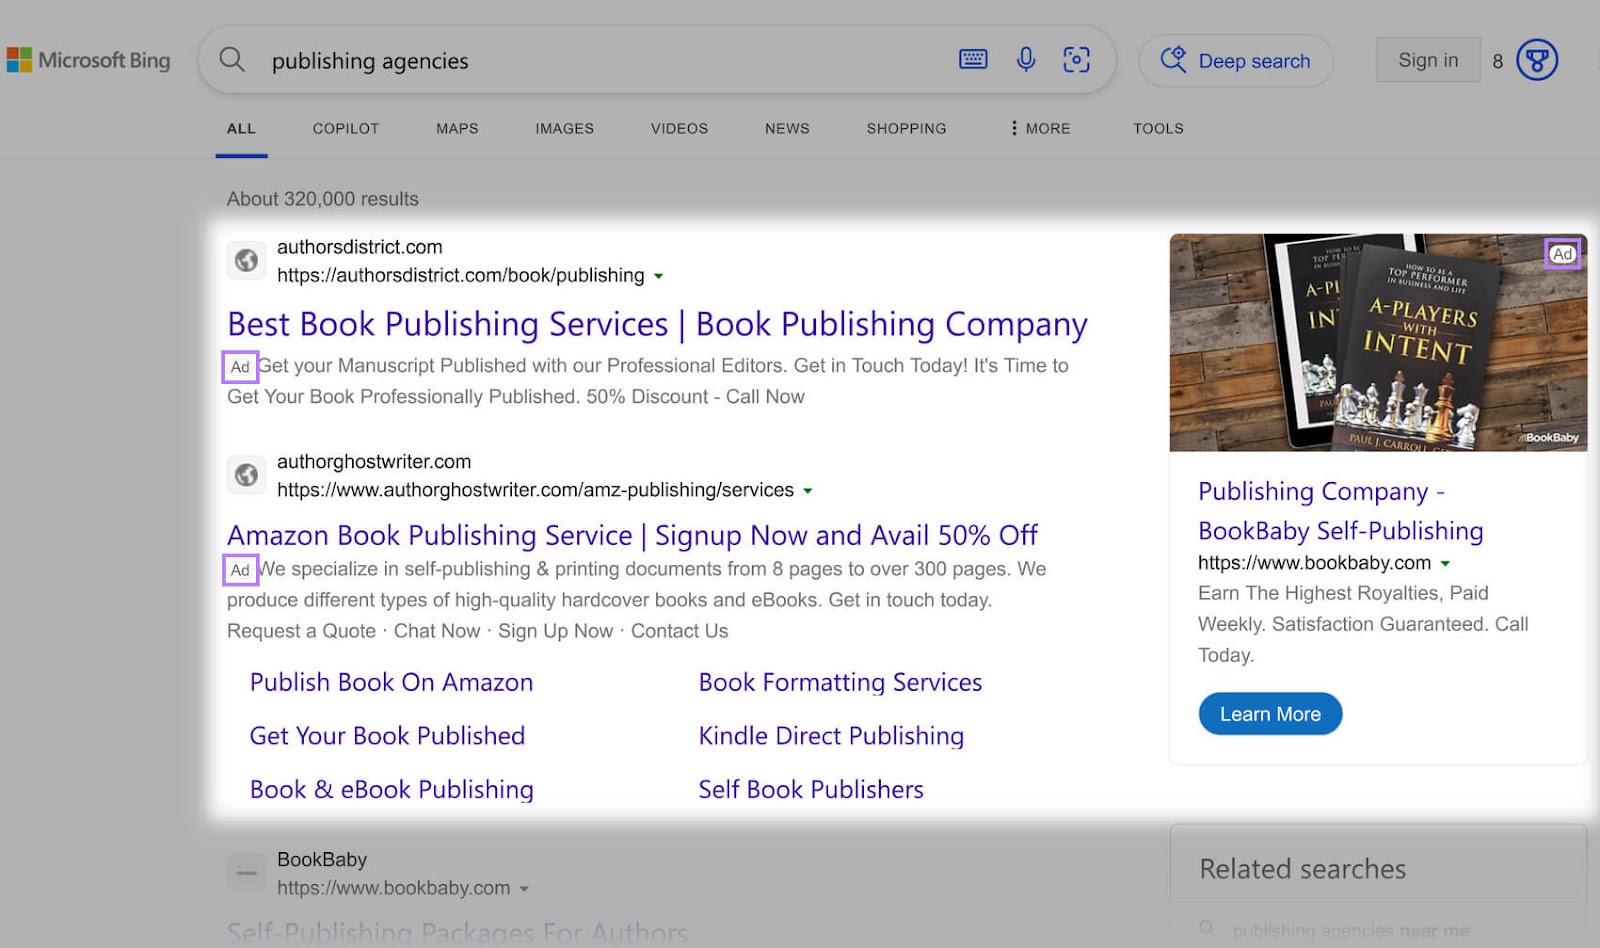 Search ads on Microsoft Bing